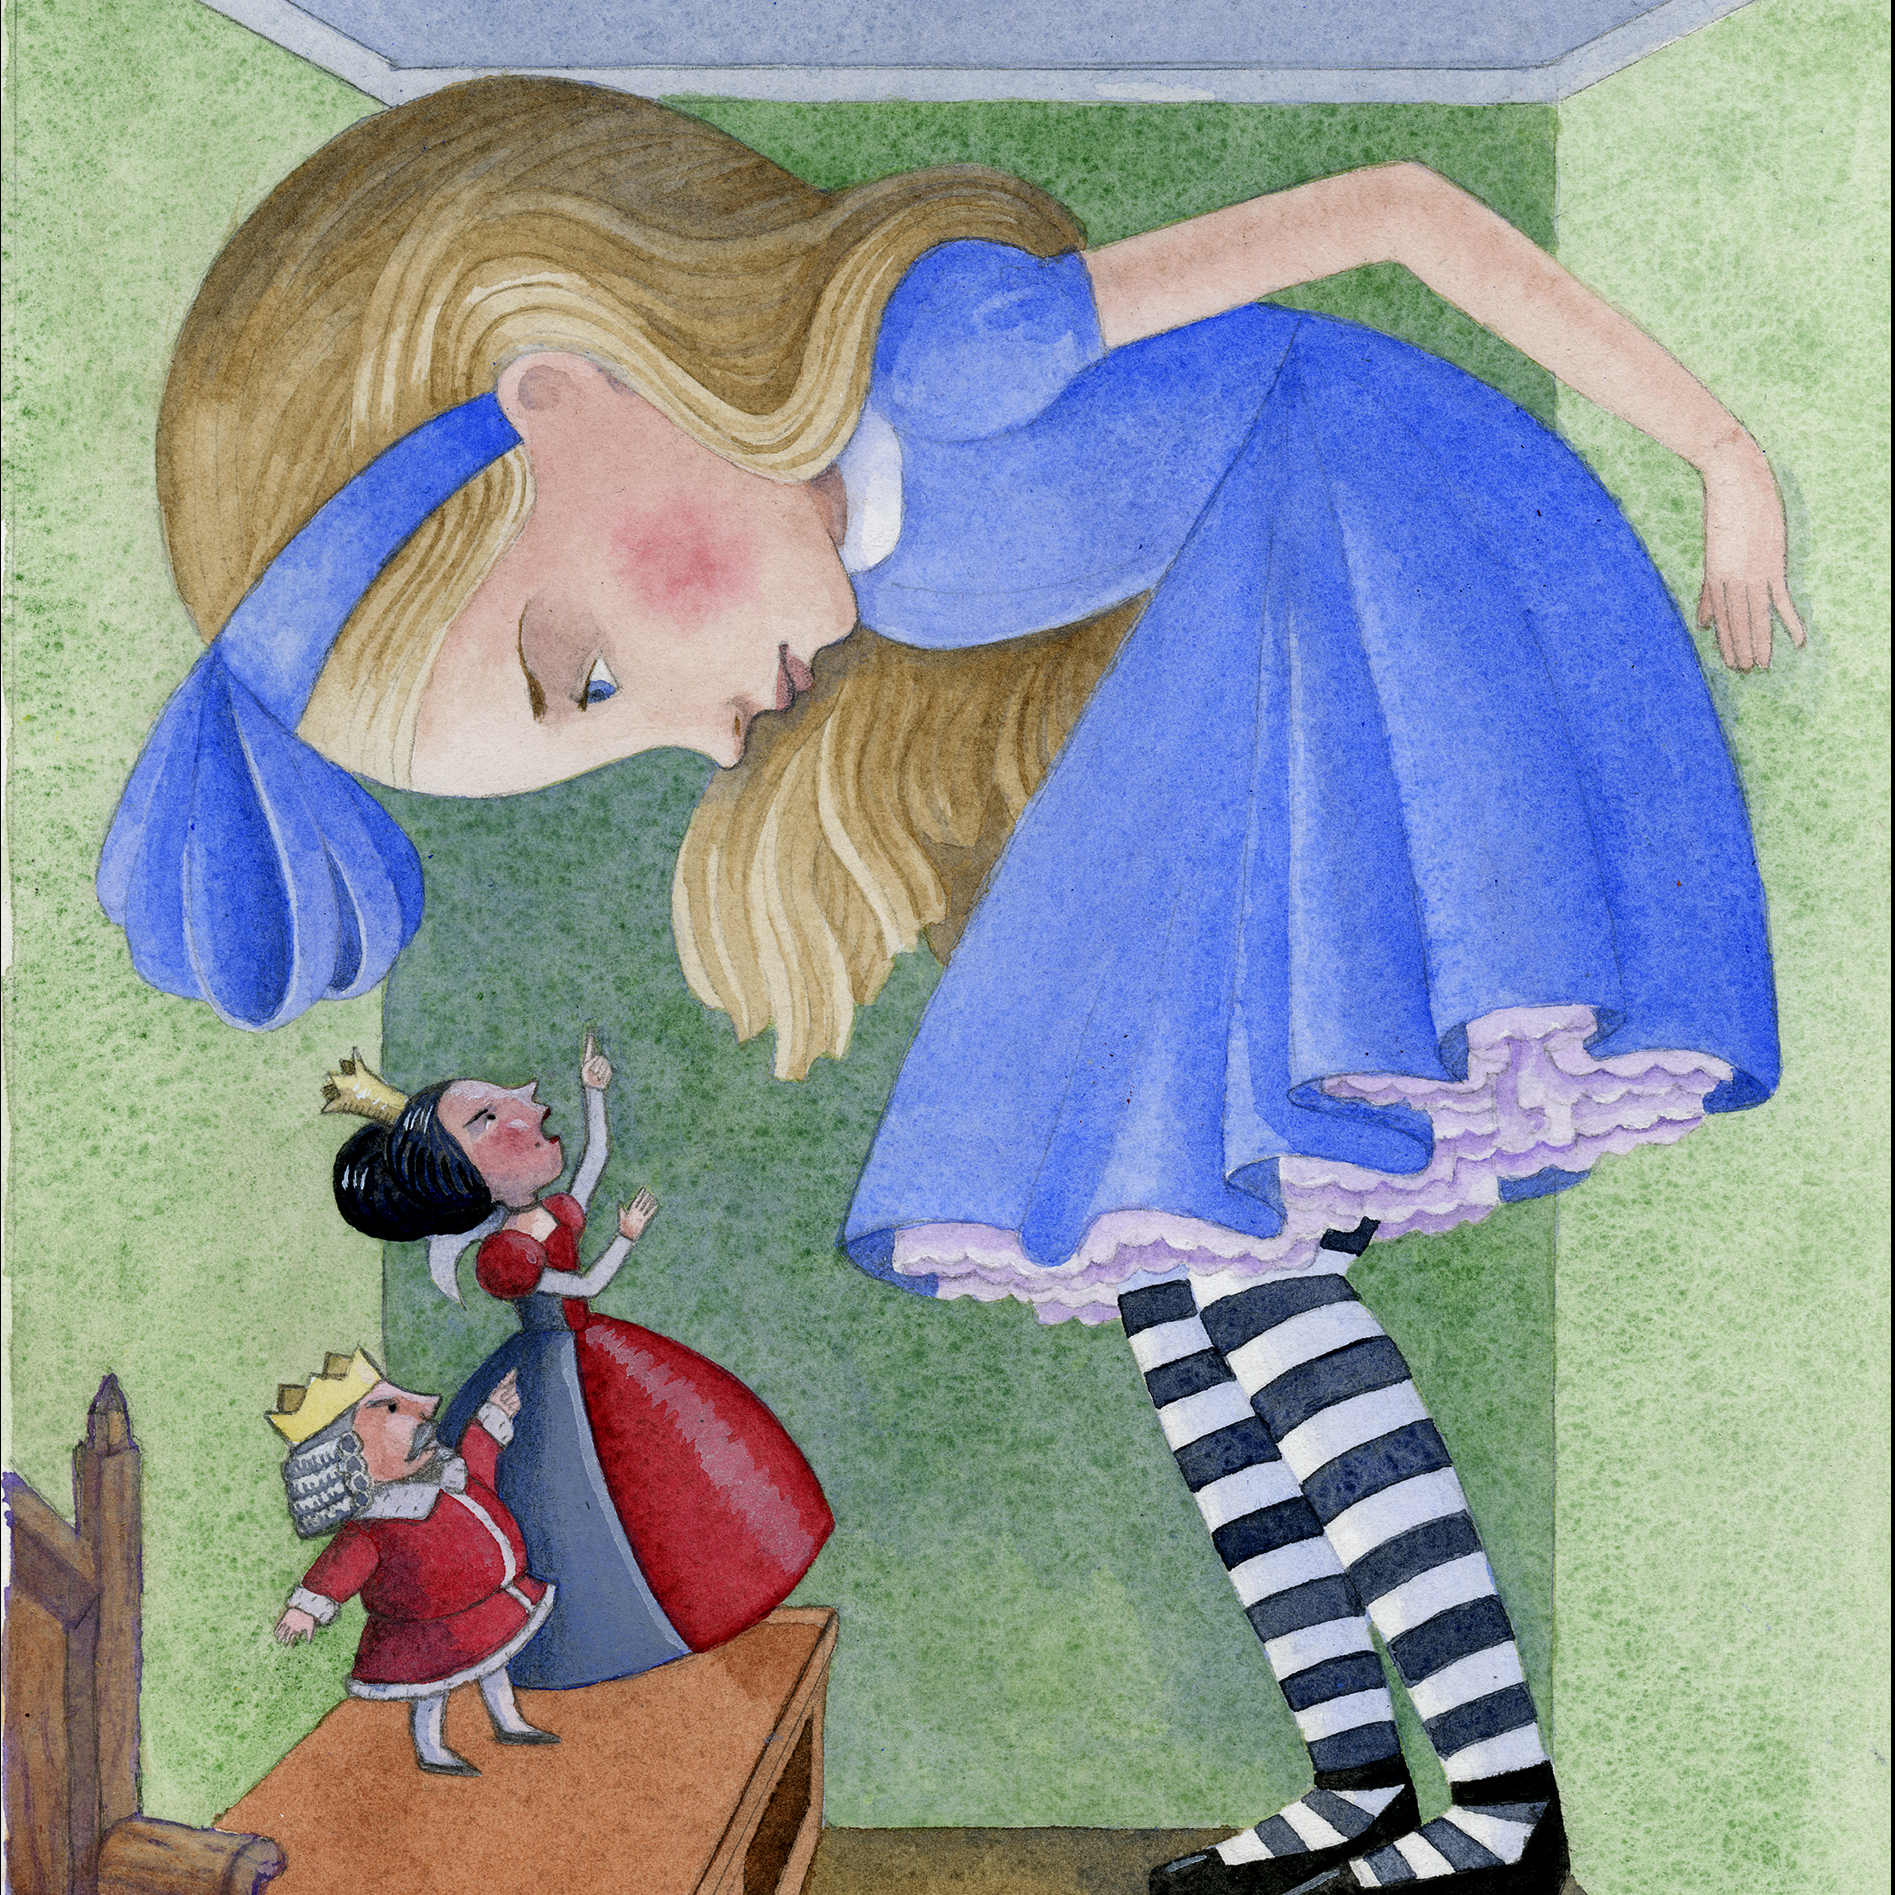 Сказку про алису в зазеркалье. Алиса в стране чудес выросла. Алиса в стране чудес иллюстрации. Алиса в стране чудес Алиса растет.